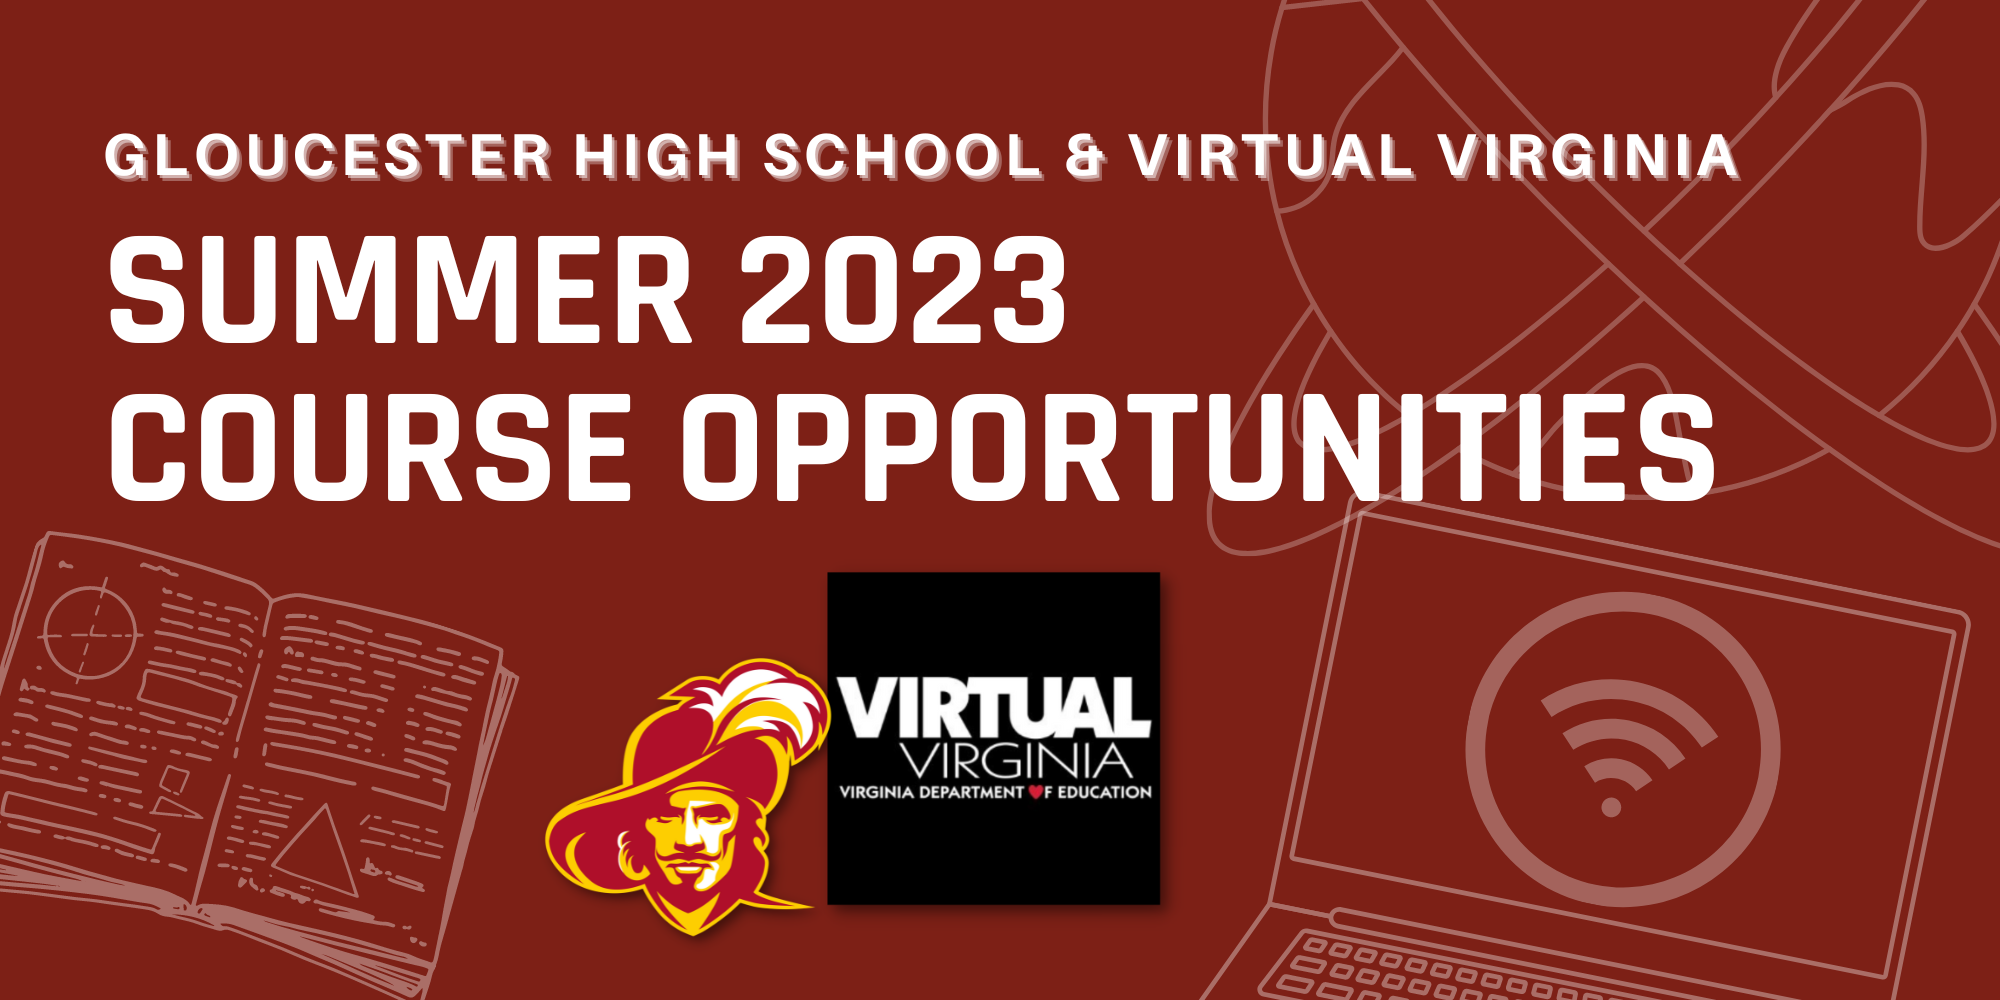 Virtual Virginia & Gloucester High School Summer 2023 Course Opportunities